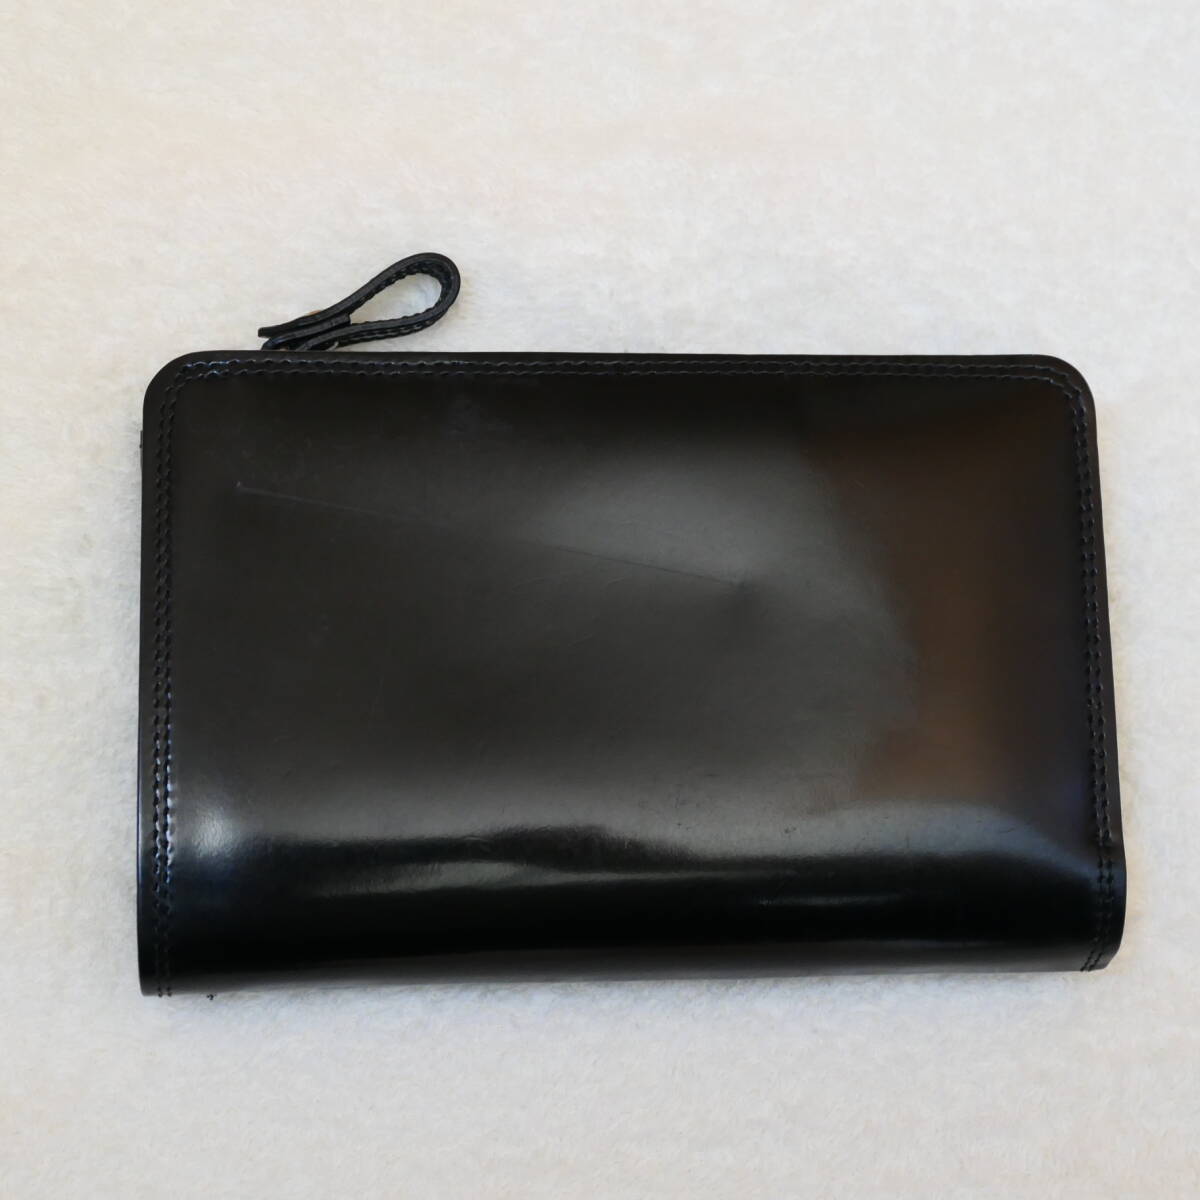  Porter counter folding twice purse wallet black 037-02979 PORTER COUNTER